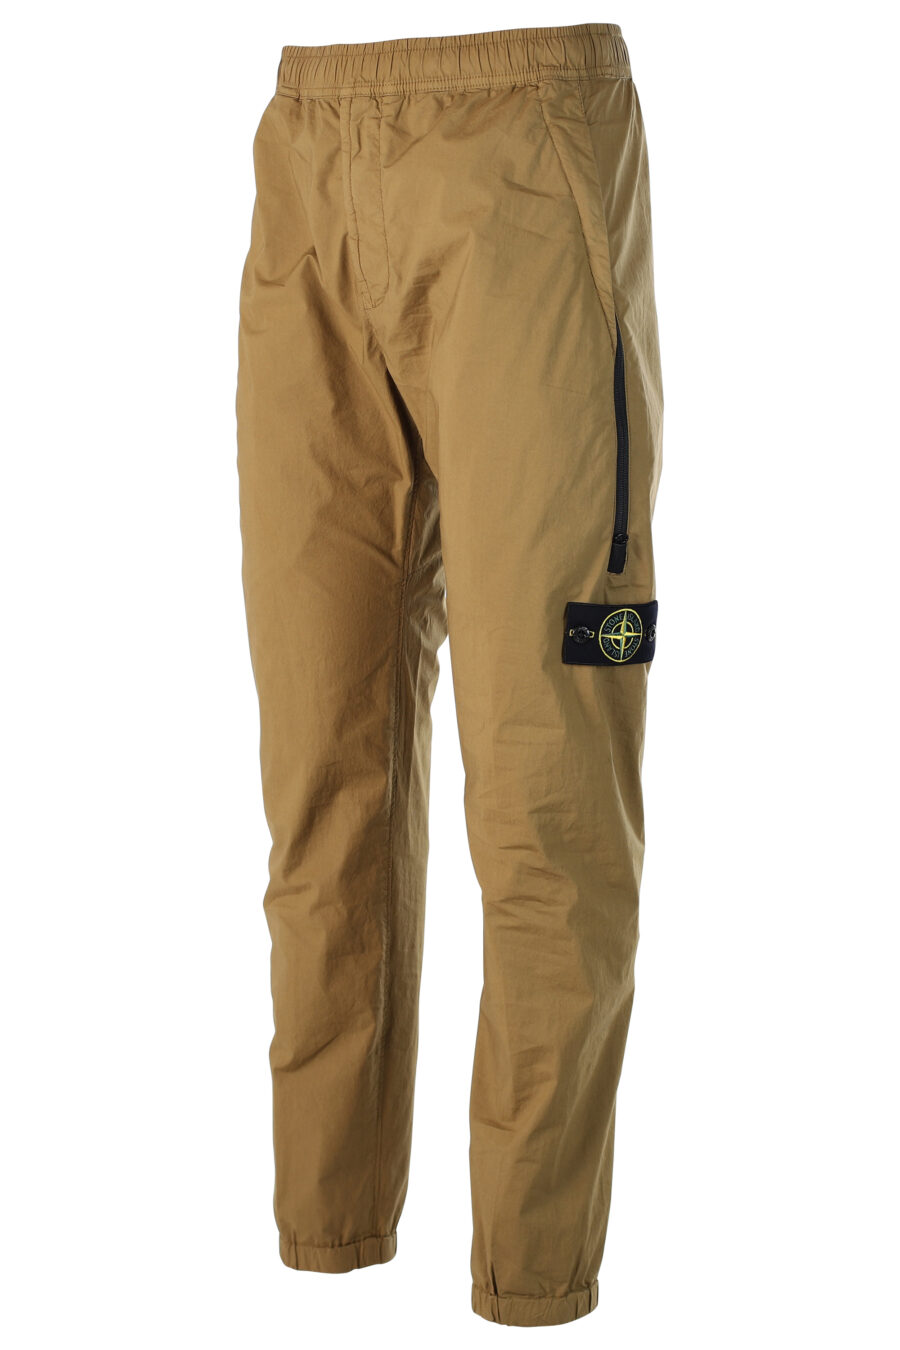 Pantalon cargo kaki avec patch - 8052572550010 2